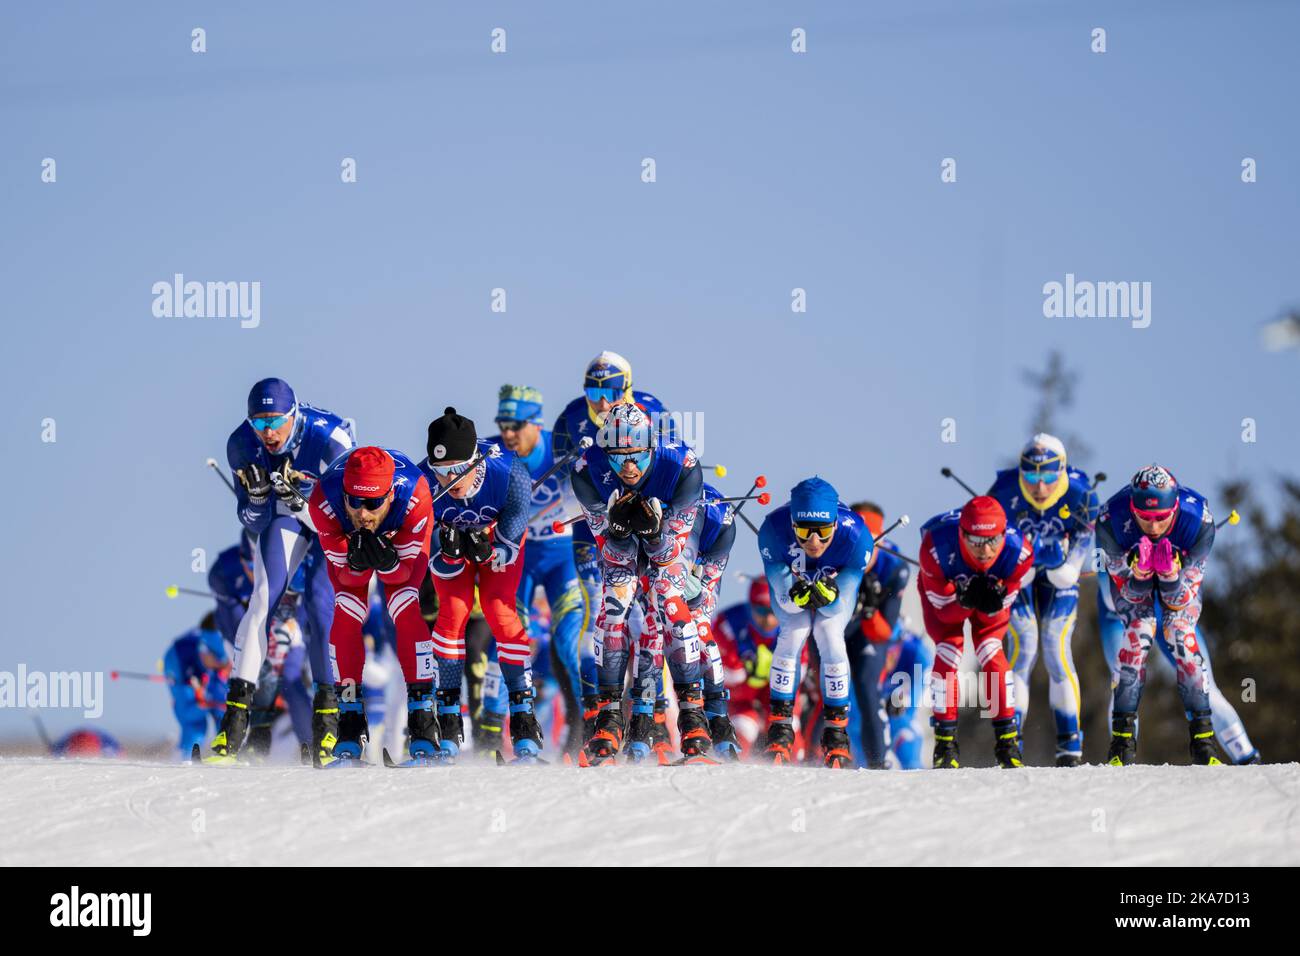 Zhangjiakou, China 20220206. PÃ¥l (Paal) Golberg from Norway under 15 km x 15 km Skiathlon for men during the Winter Olympics in Beijing 2022. Photo: Fredrik Varfjell / NTB  Stock Photo